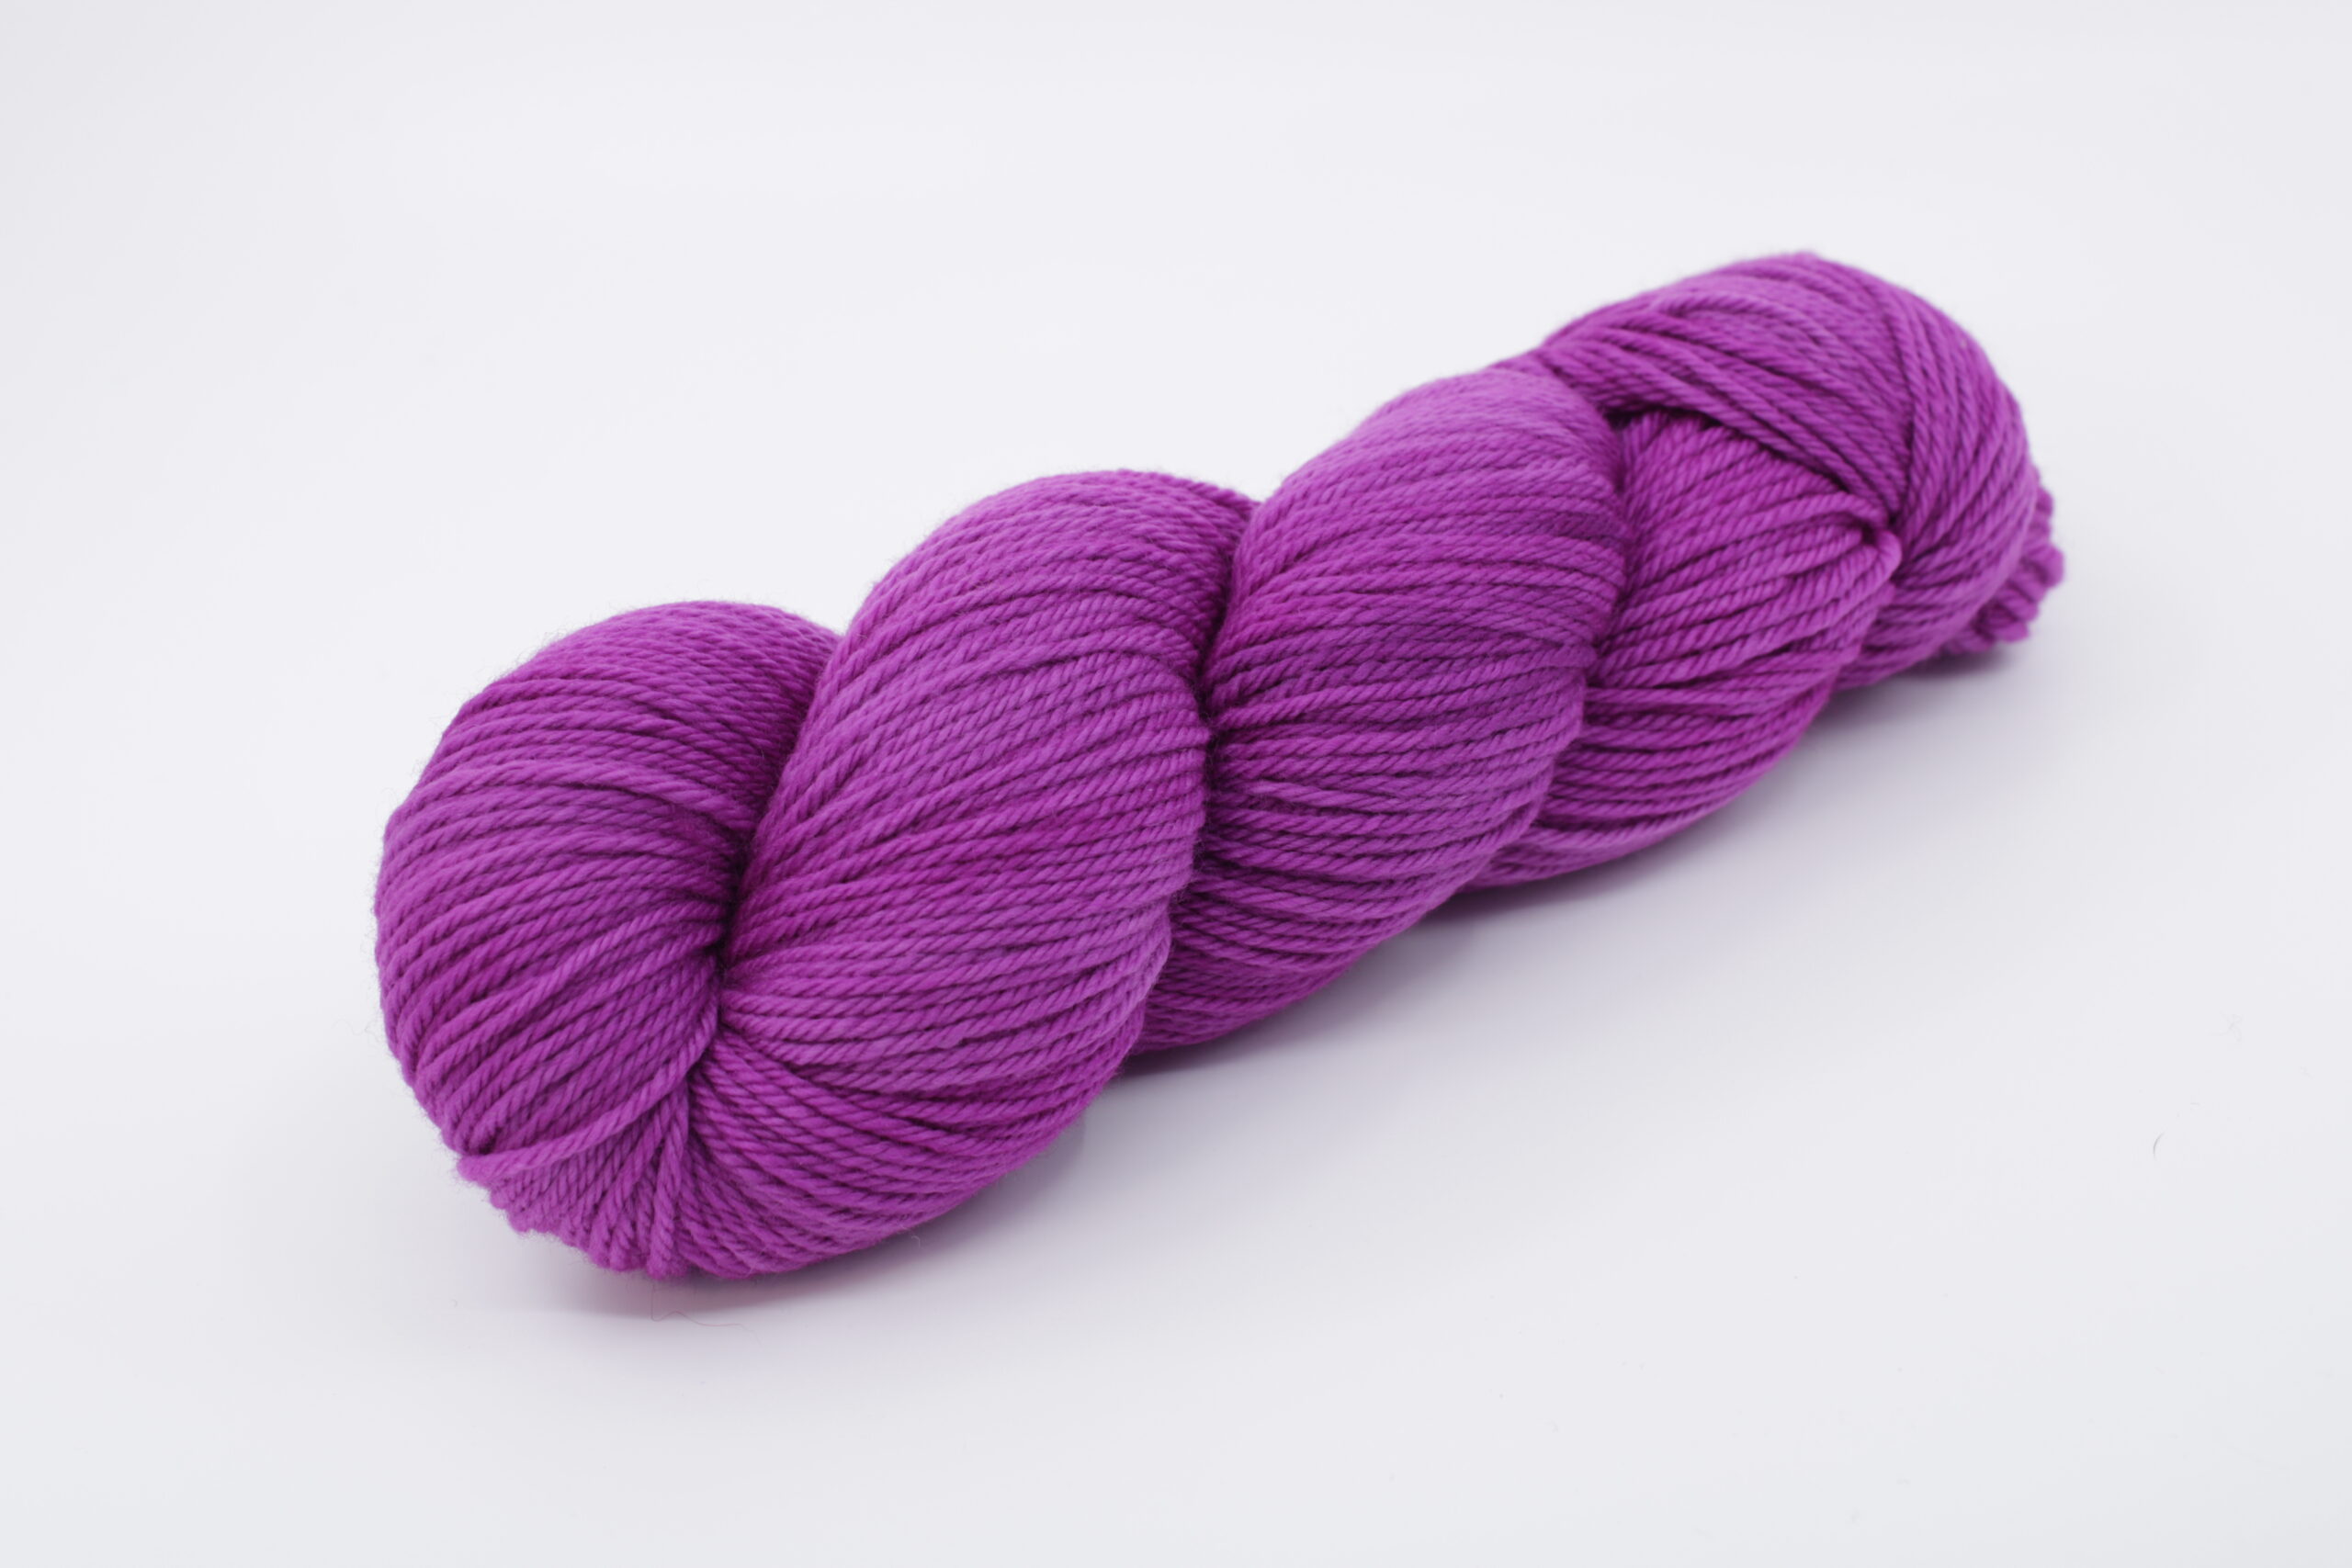 Fibrani wool, base: Flocon DK. 100% untreated merino wool, magenta color. Color: Gerbera.